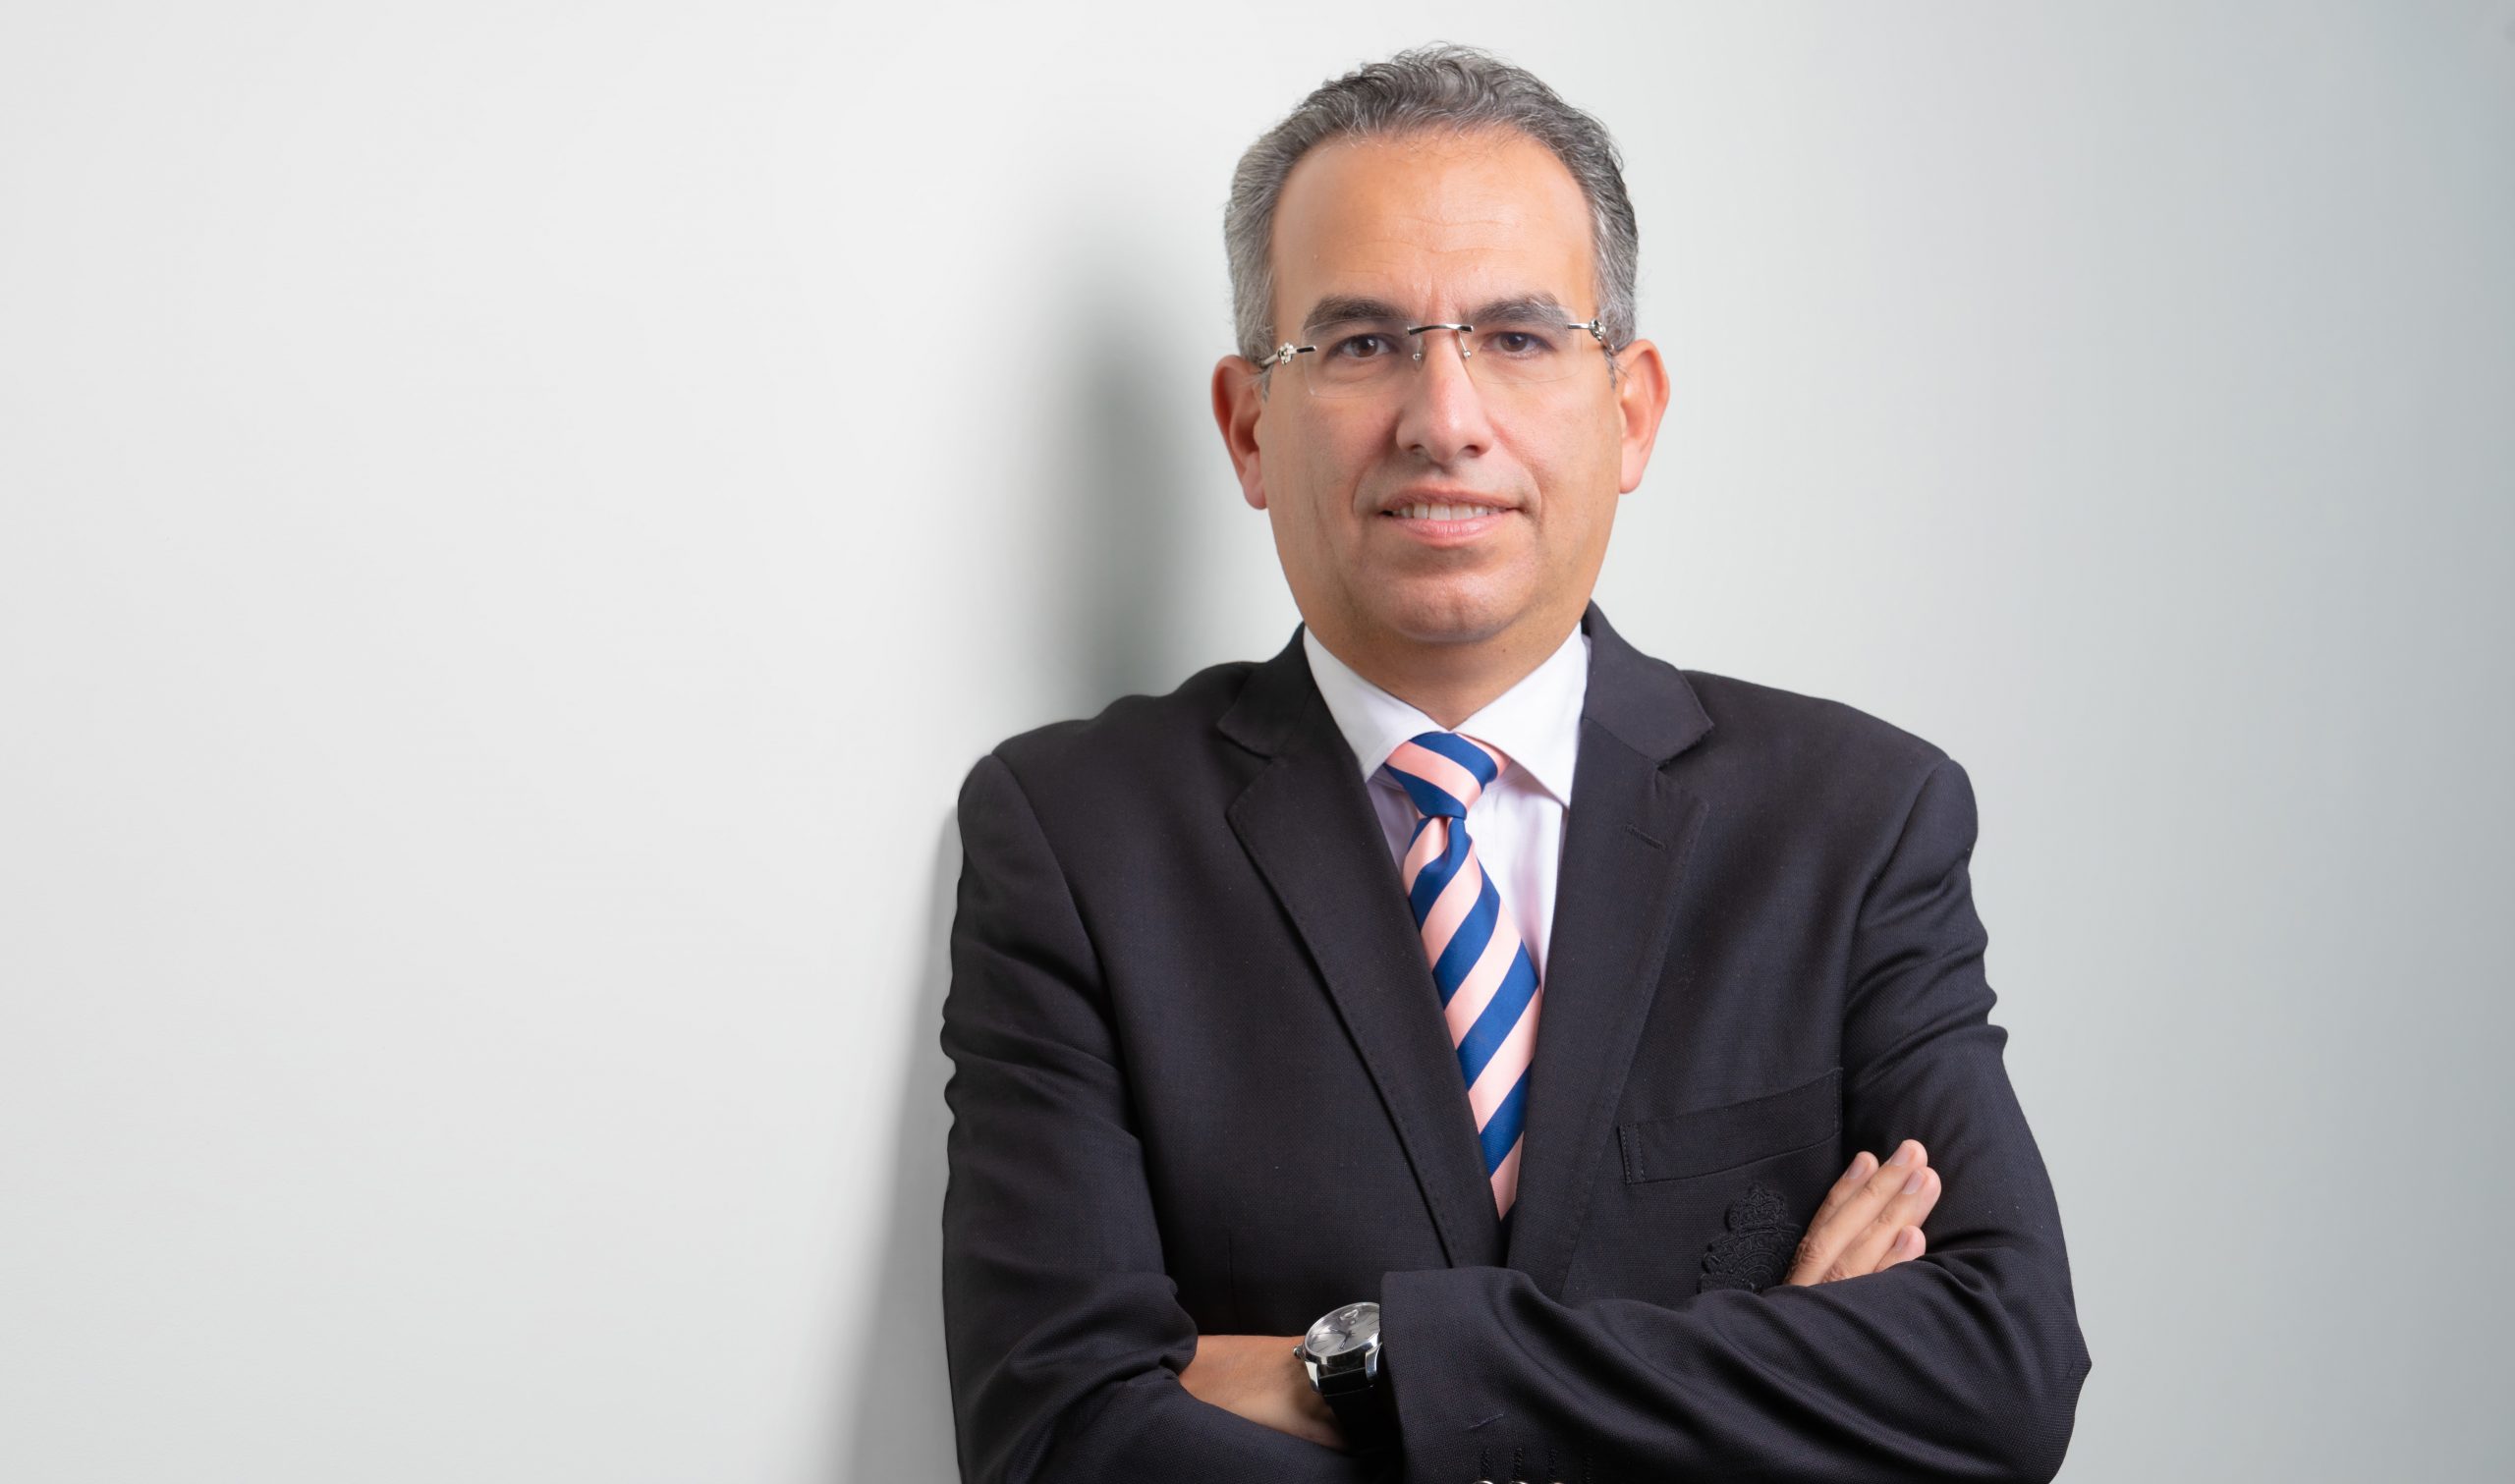 Ramez Mohsen-Fawzi zum neuen Managing Director von Janssen Austria bestellt